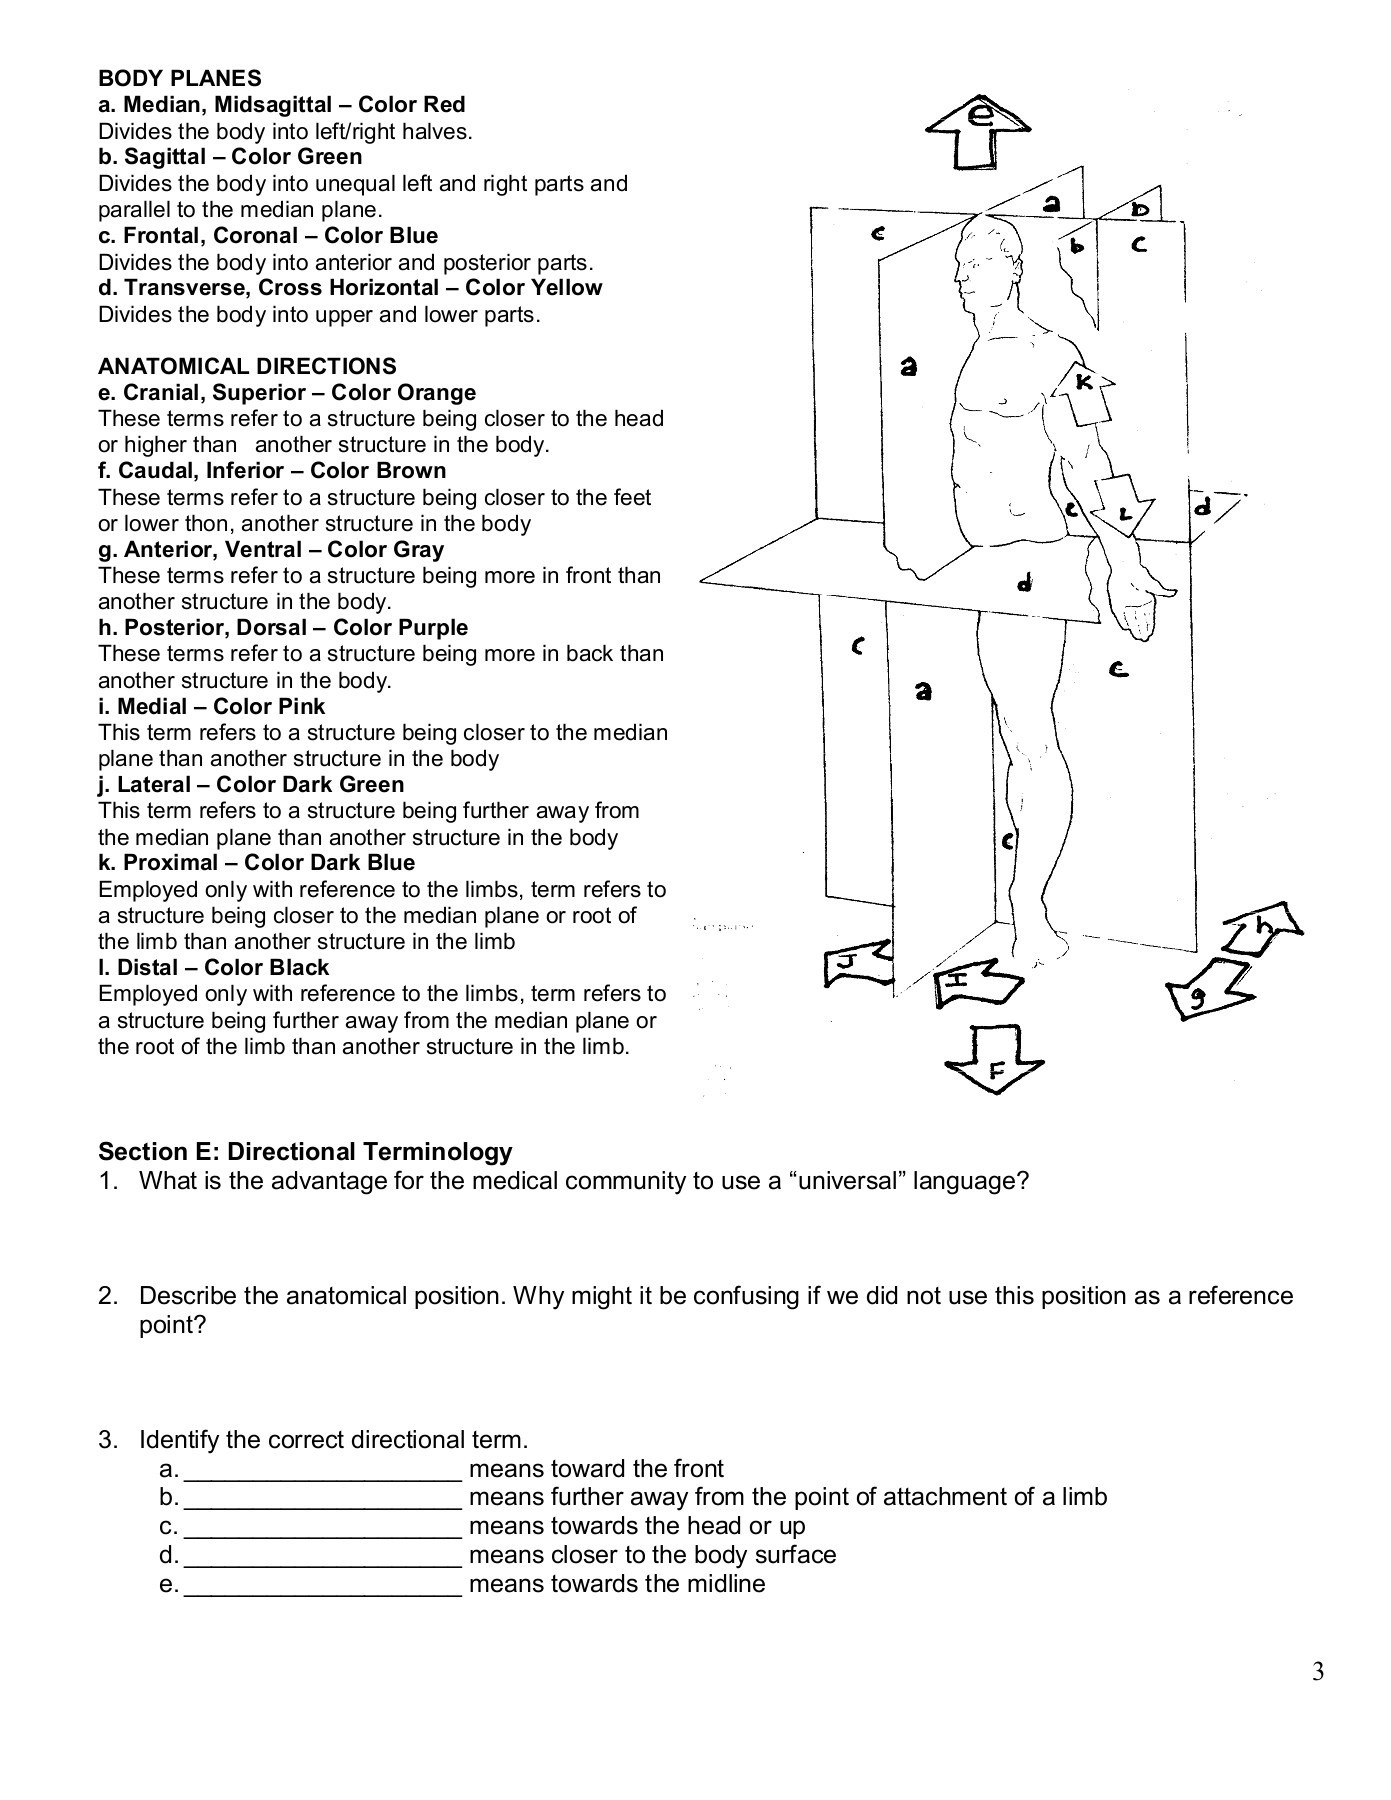 Anatomical Terms Worksheet Answer Key Anatomy Worksheets